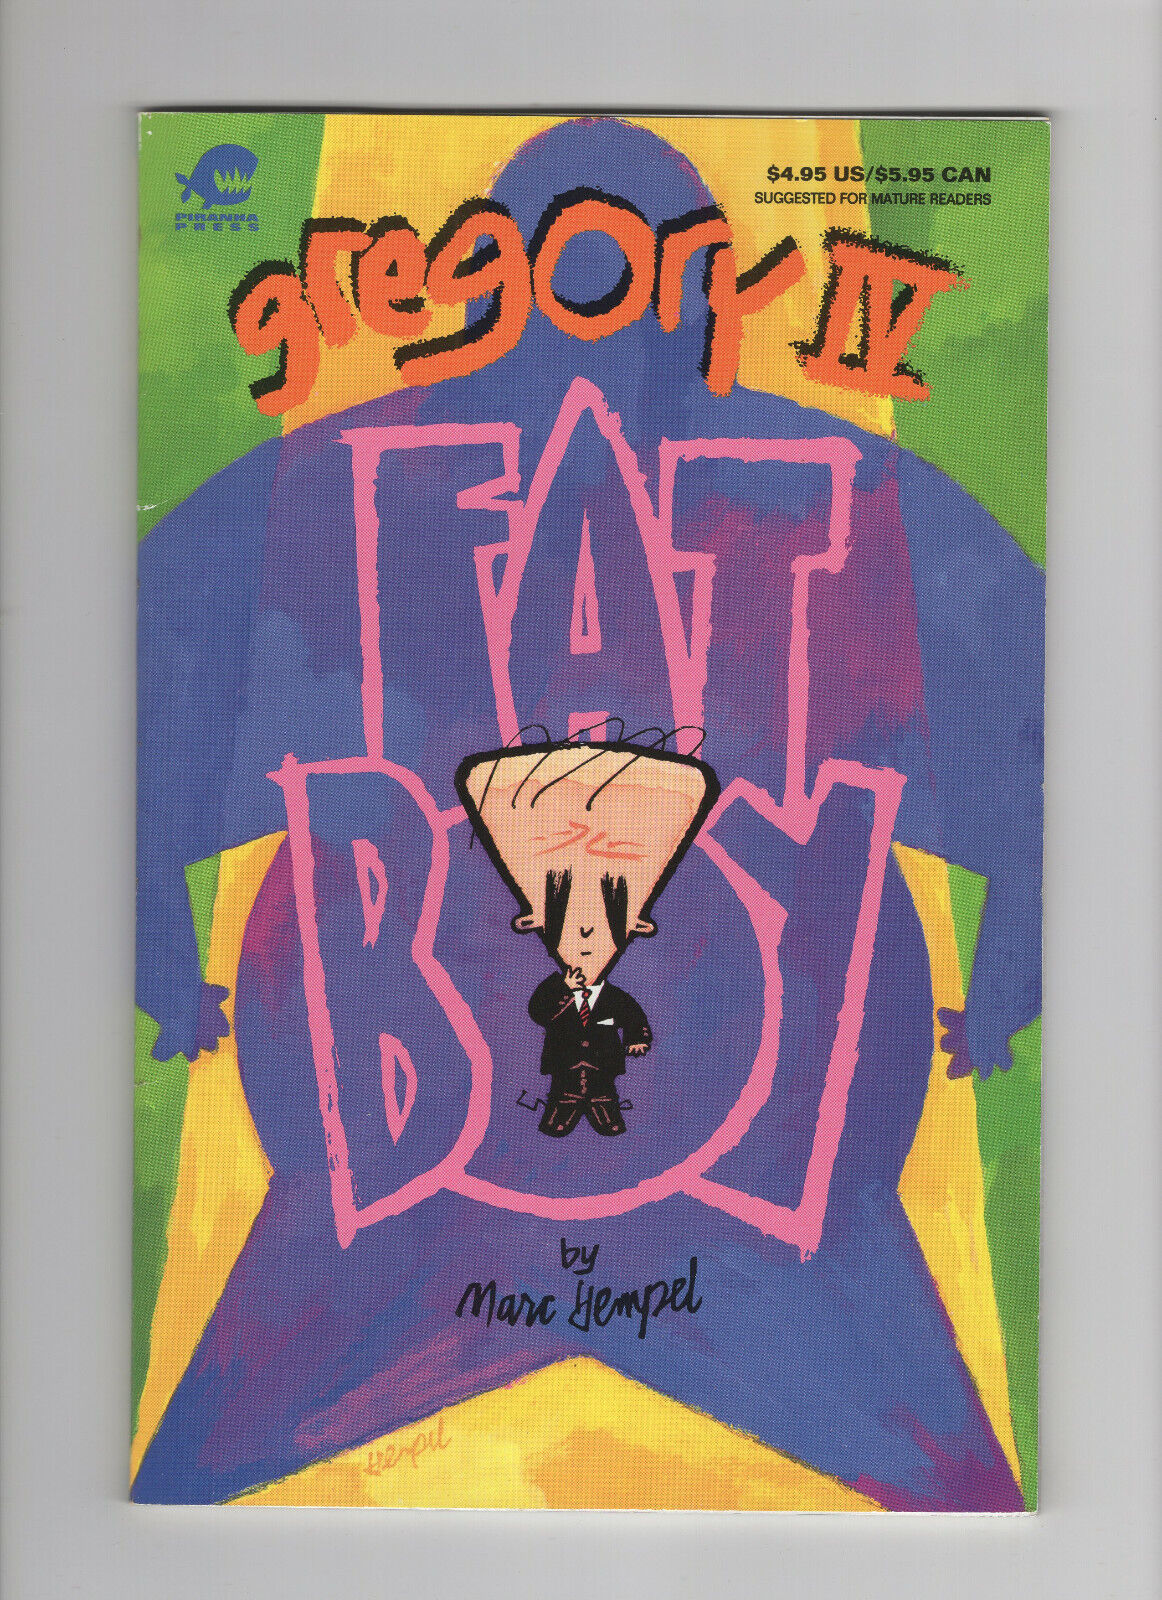 Gregory IV Fat Boy (1993 Piranha Press)